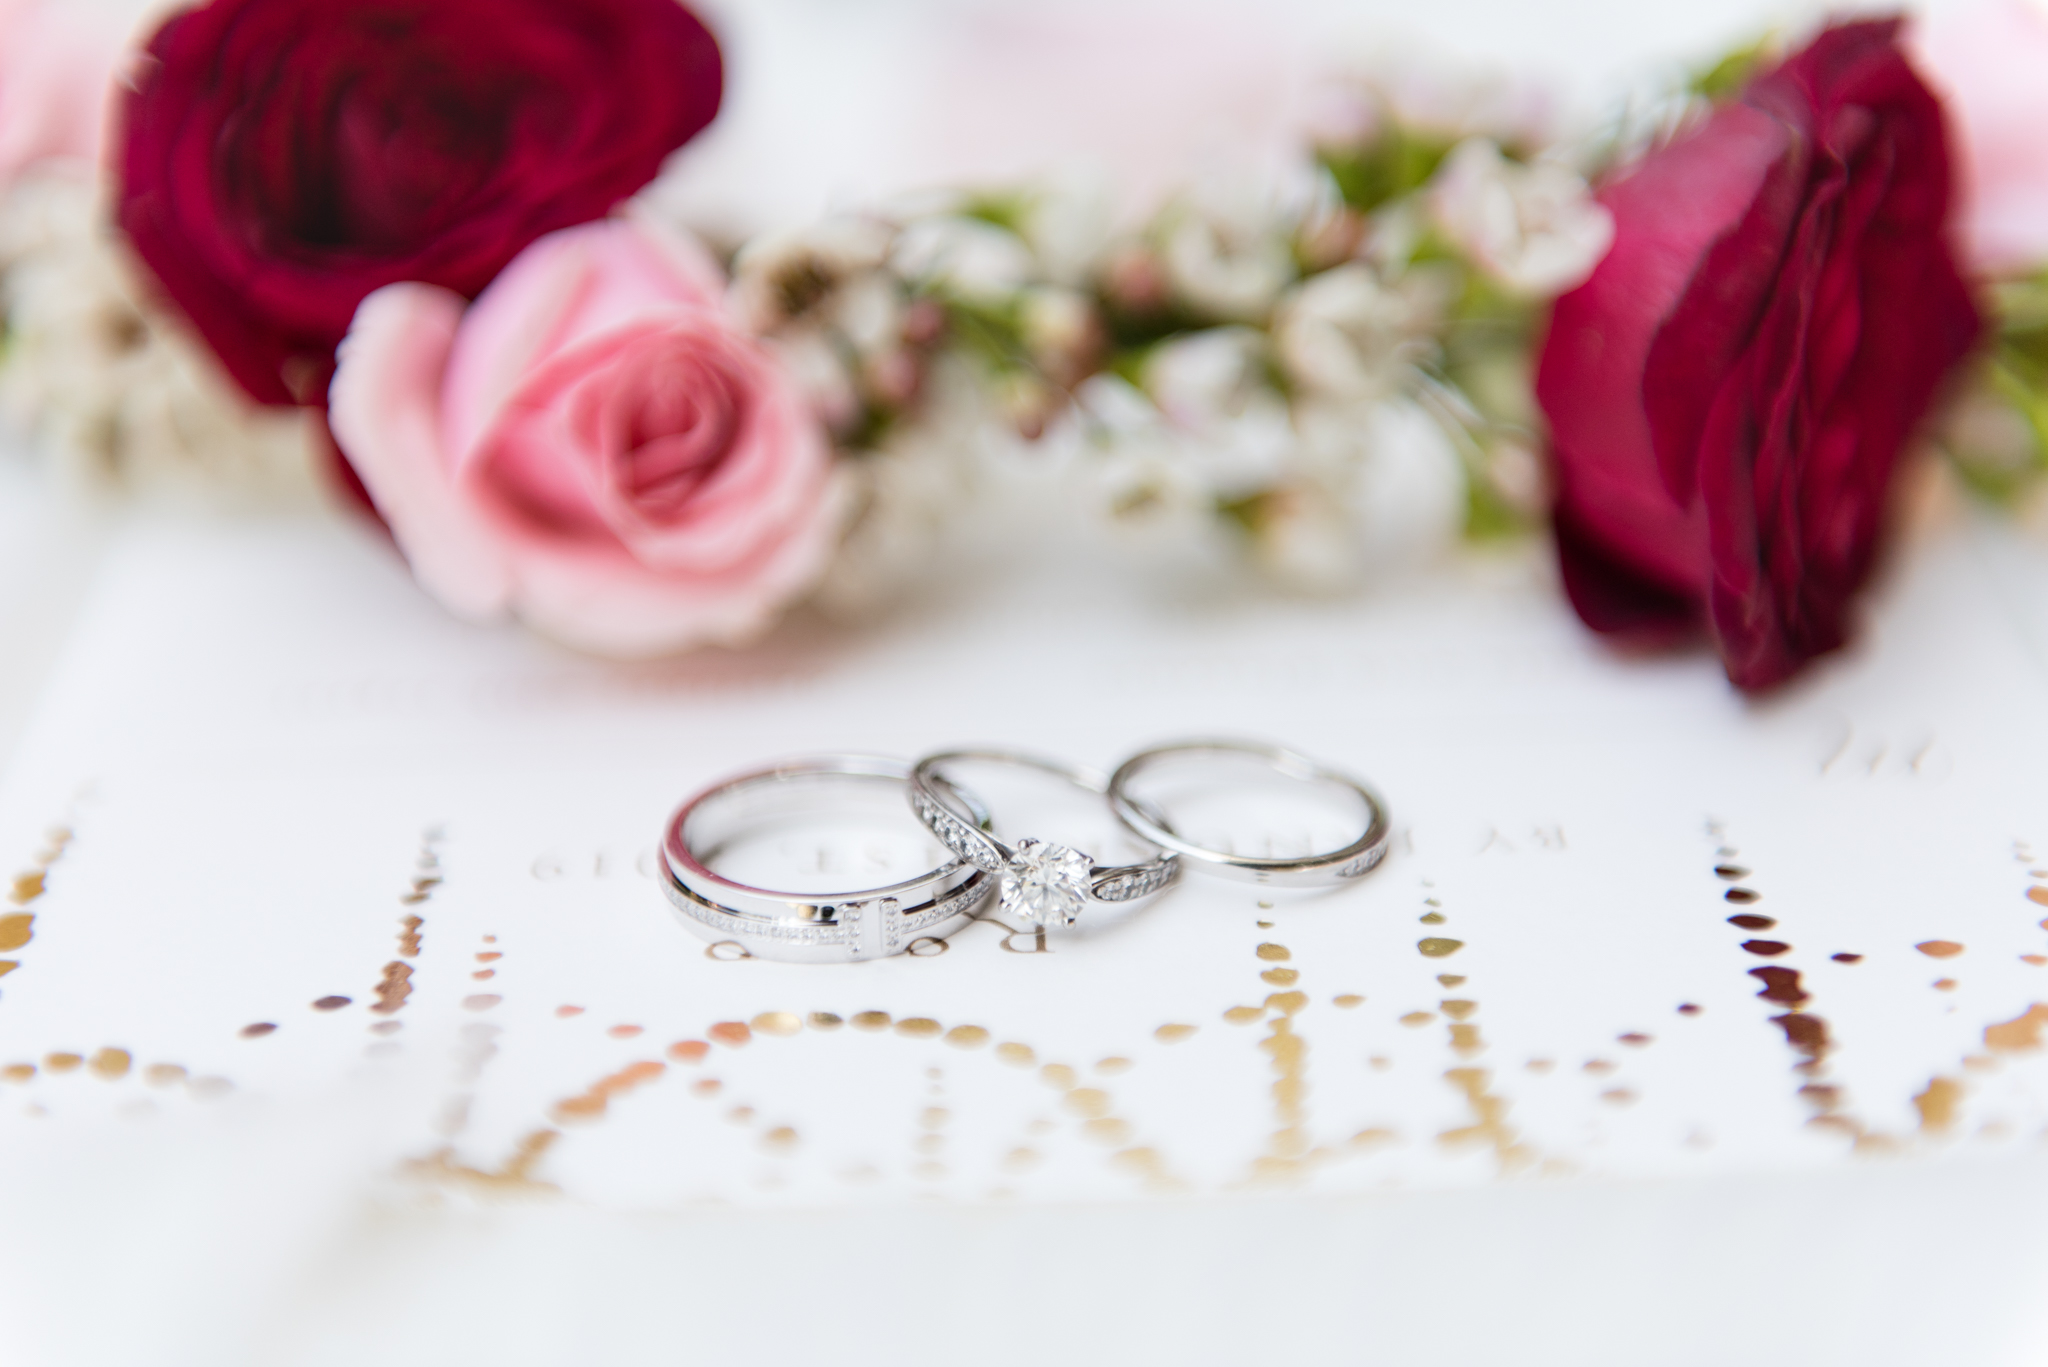 Wedding rings sit on invitations.